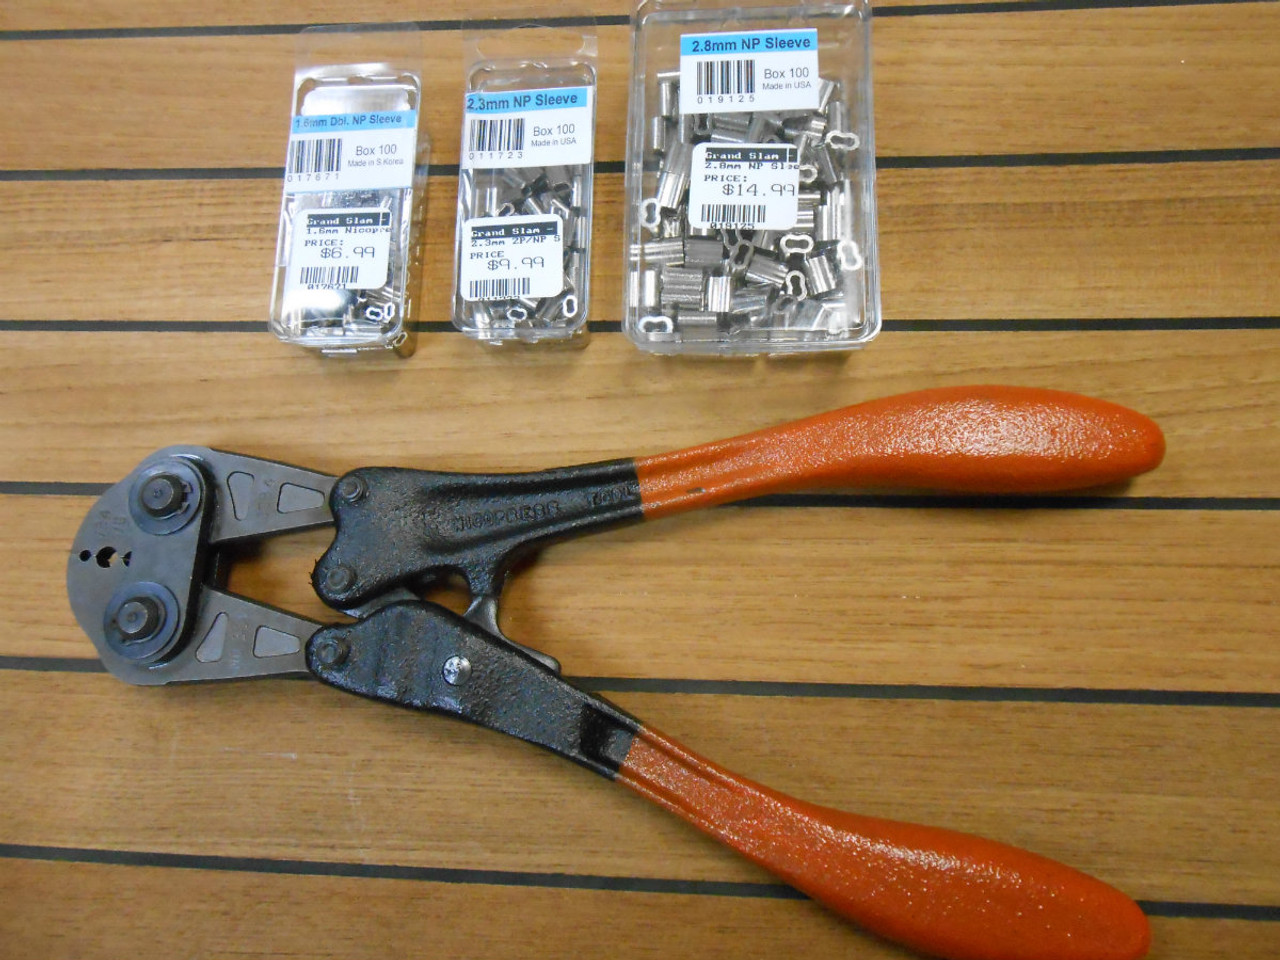 Black Hook Tackle Cable Crimps - Nicopress Style Crimps